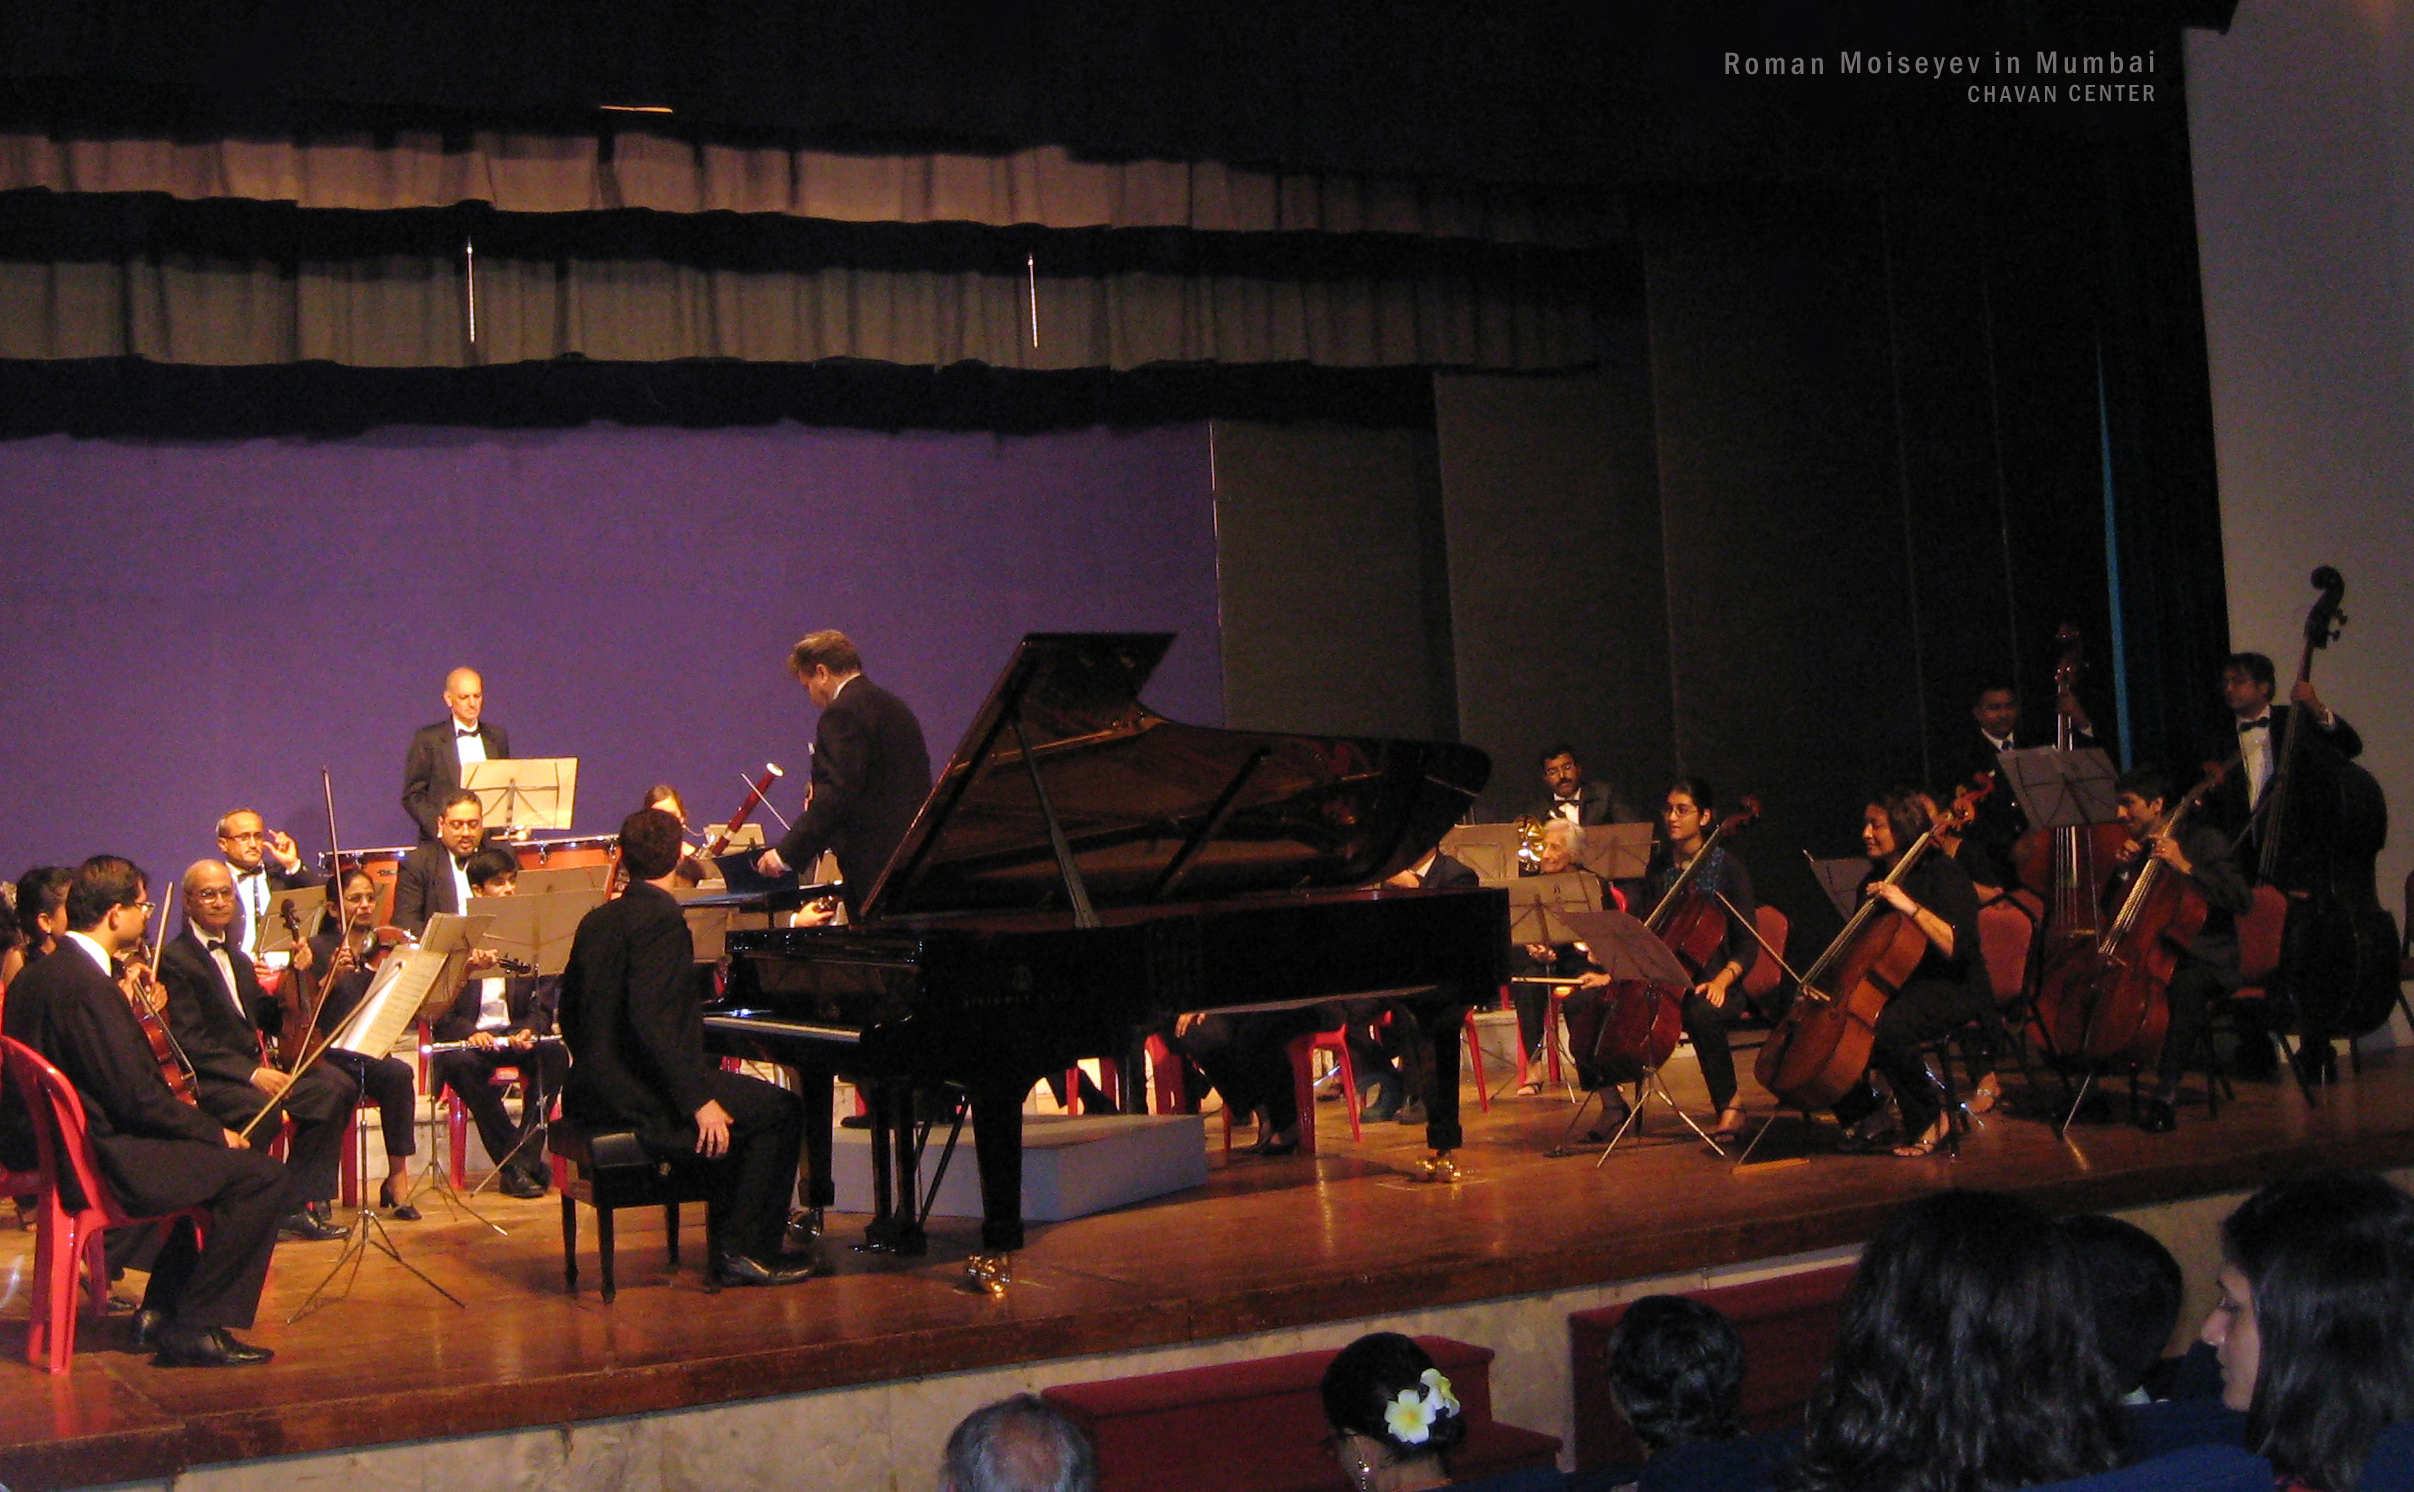 Yaron Kohlberg and Roman Moiseyev with The Bombay Chamber Orchestra in Y. B. Chavan Centre. India. Mumbai. September 4, 2011